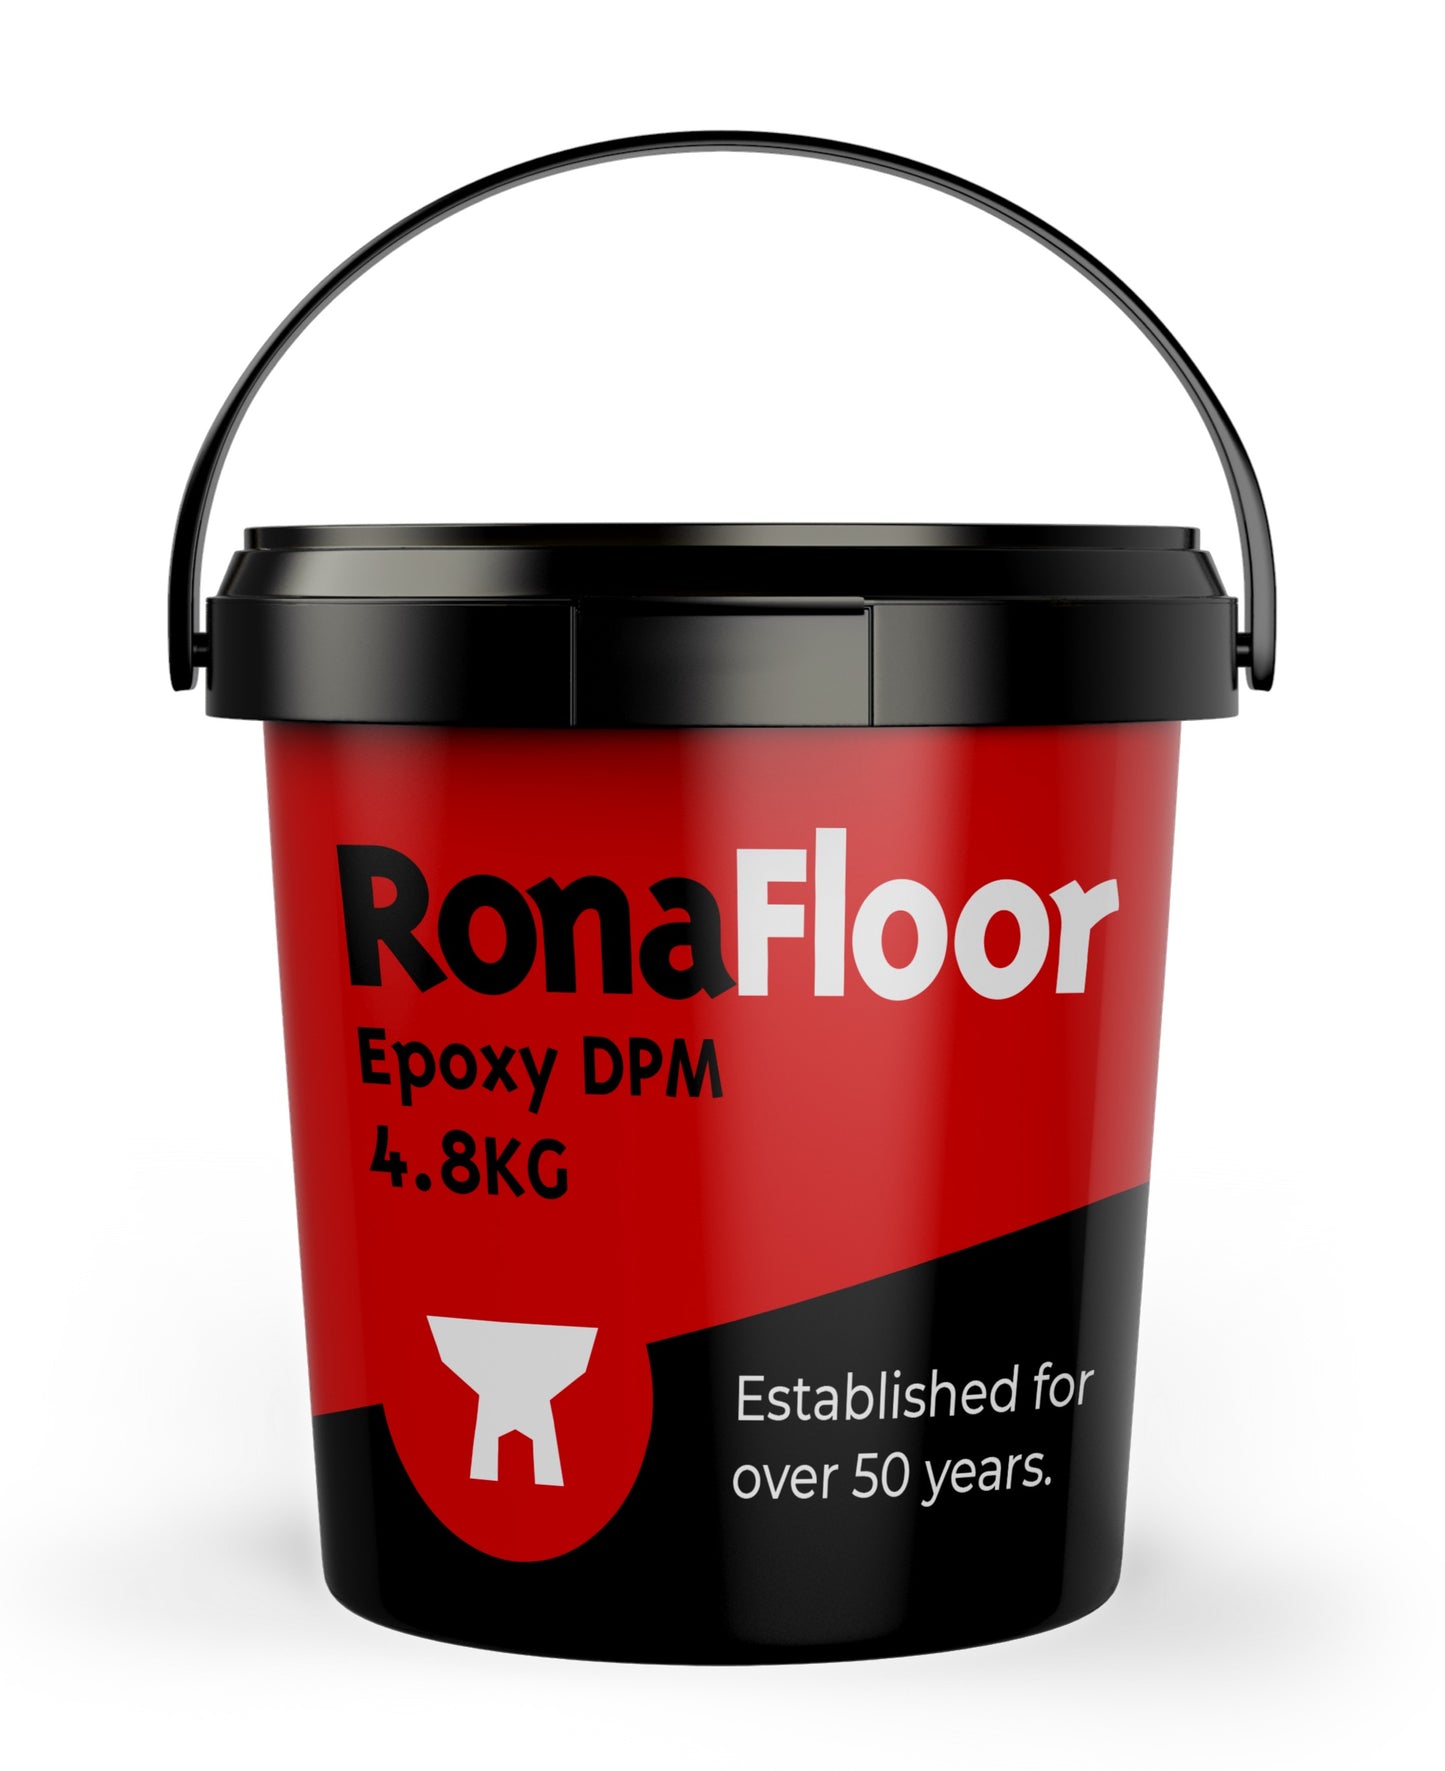 RonaFloor Epoxy DPM